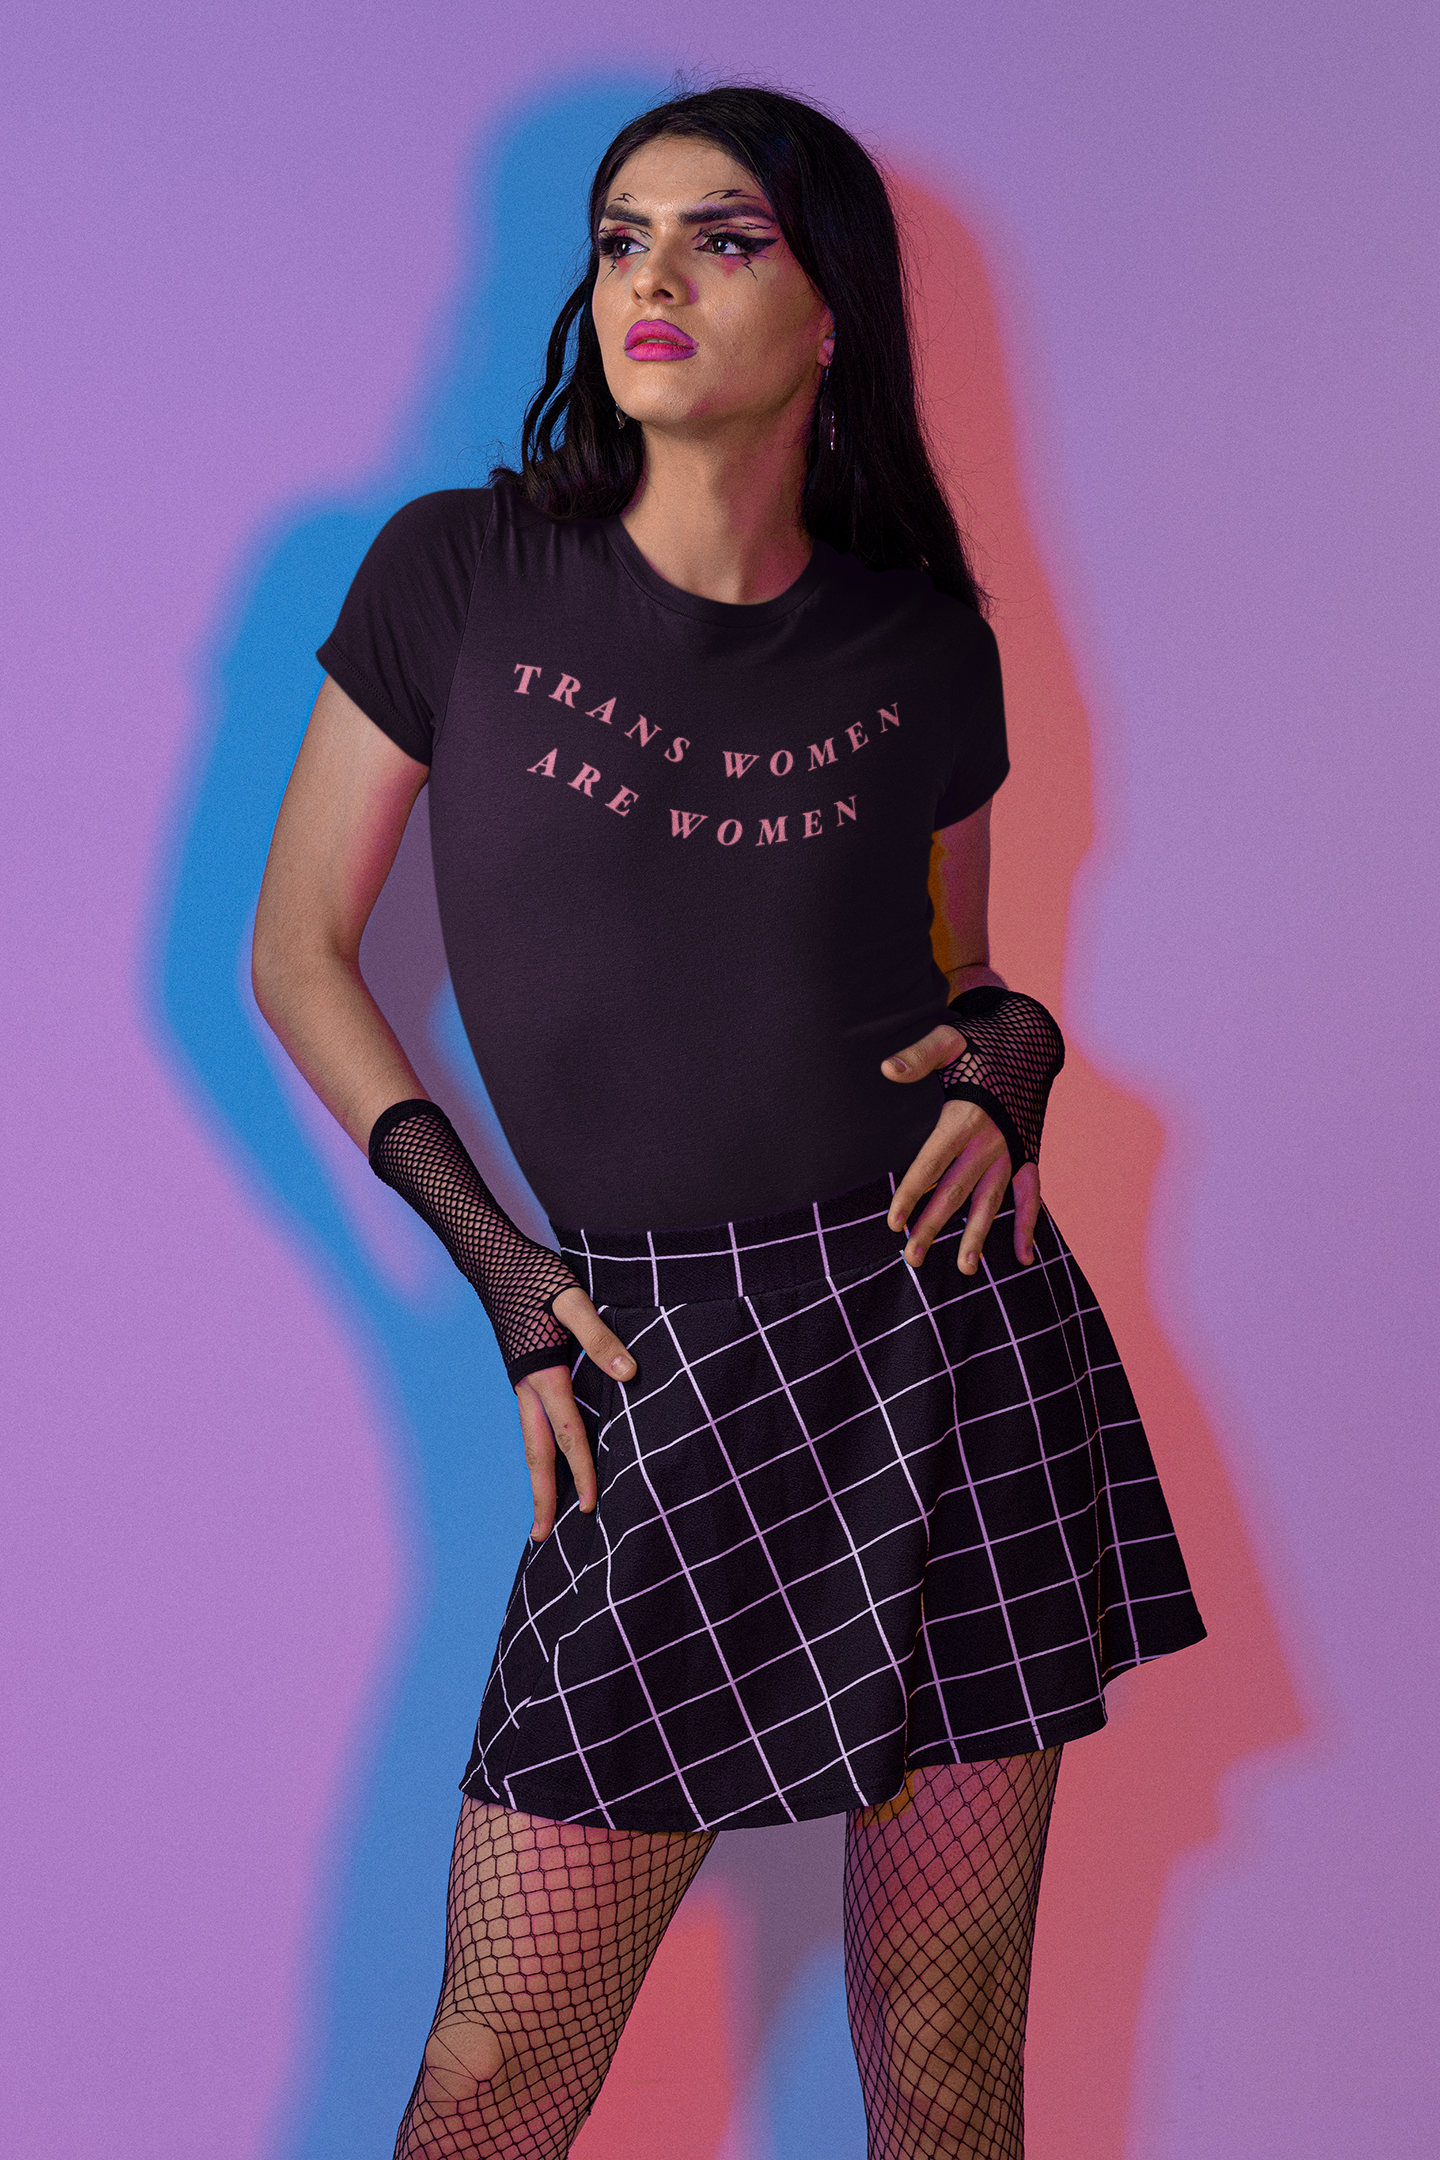 Trans Women Are Women Unisex Feminist T-Shirt- Shop Women’s Rights T-Shirts - Feminist Trash Store - Black Women’s Shirt